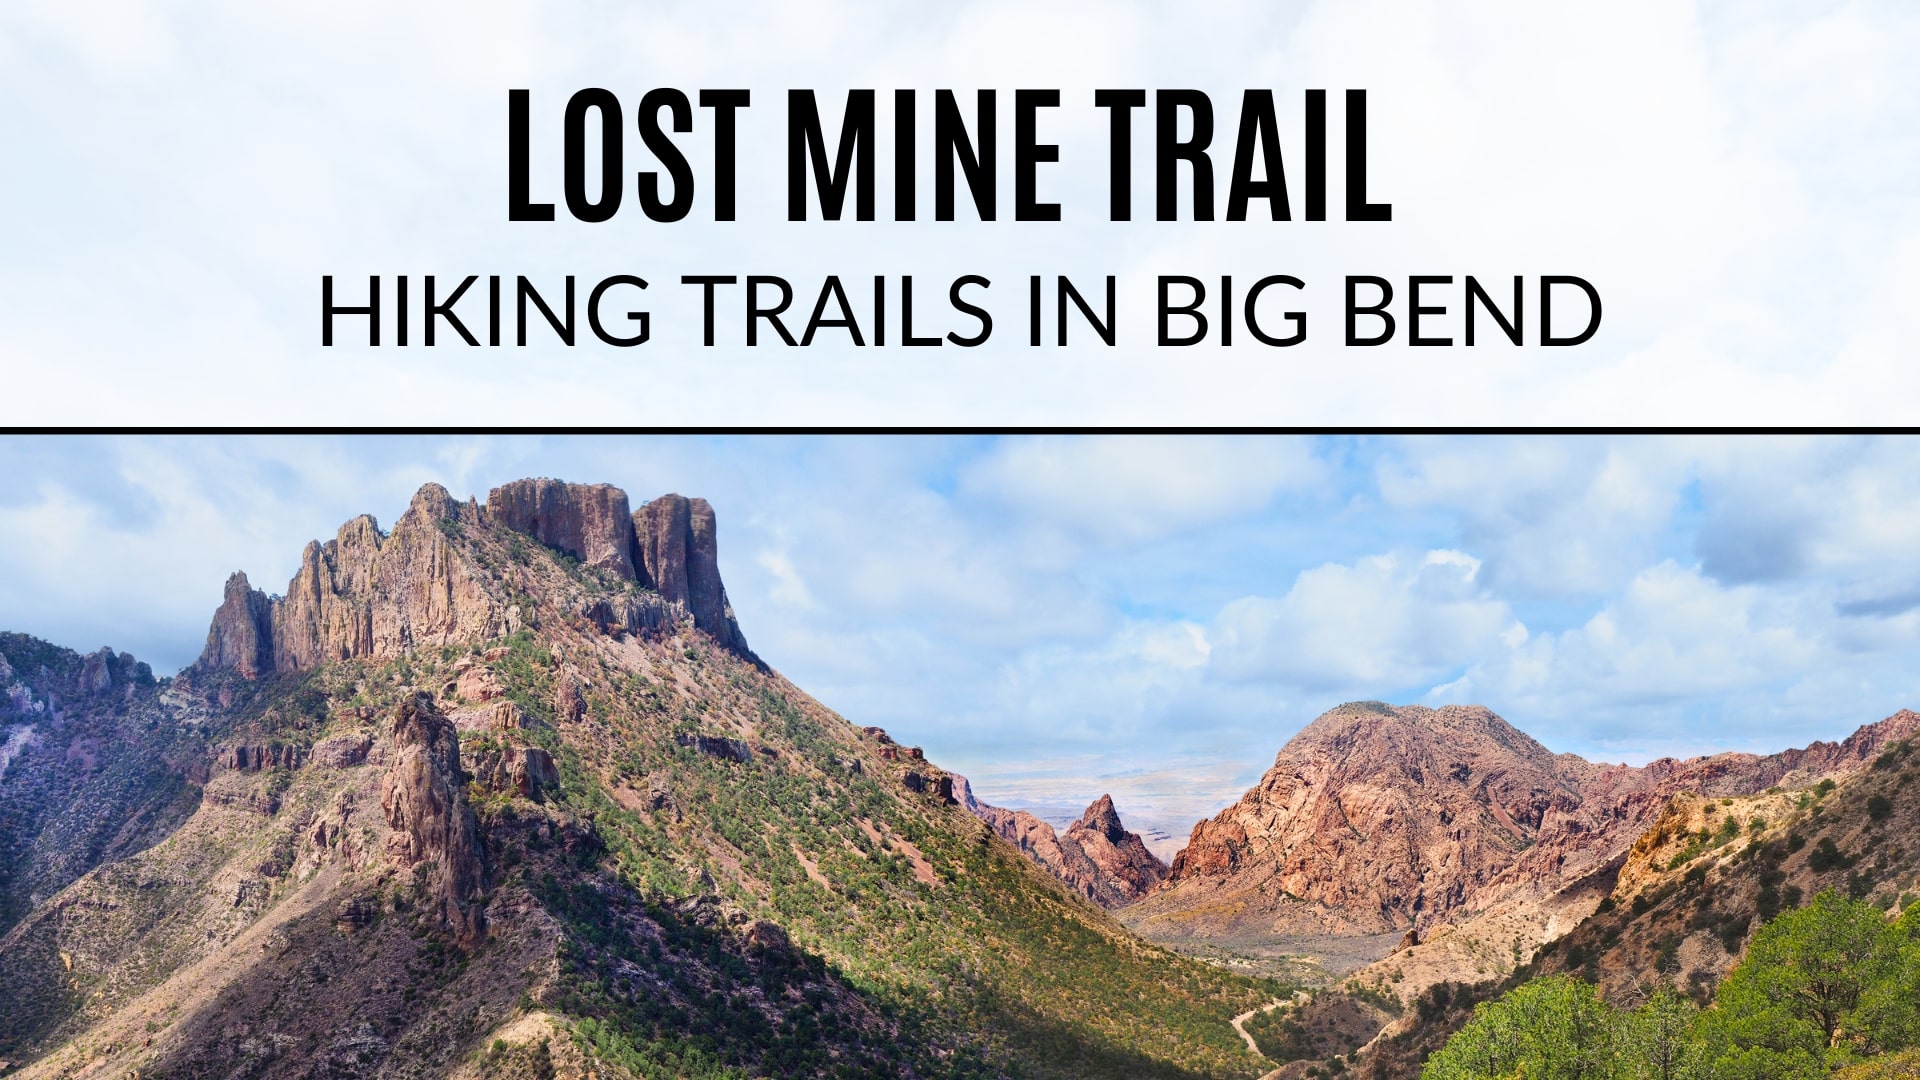 Hiking Lost Mine Trail - Big Bend National Park